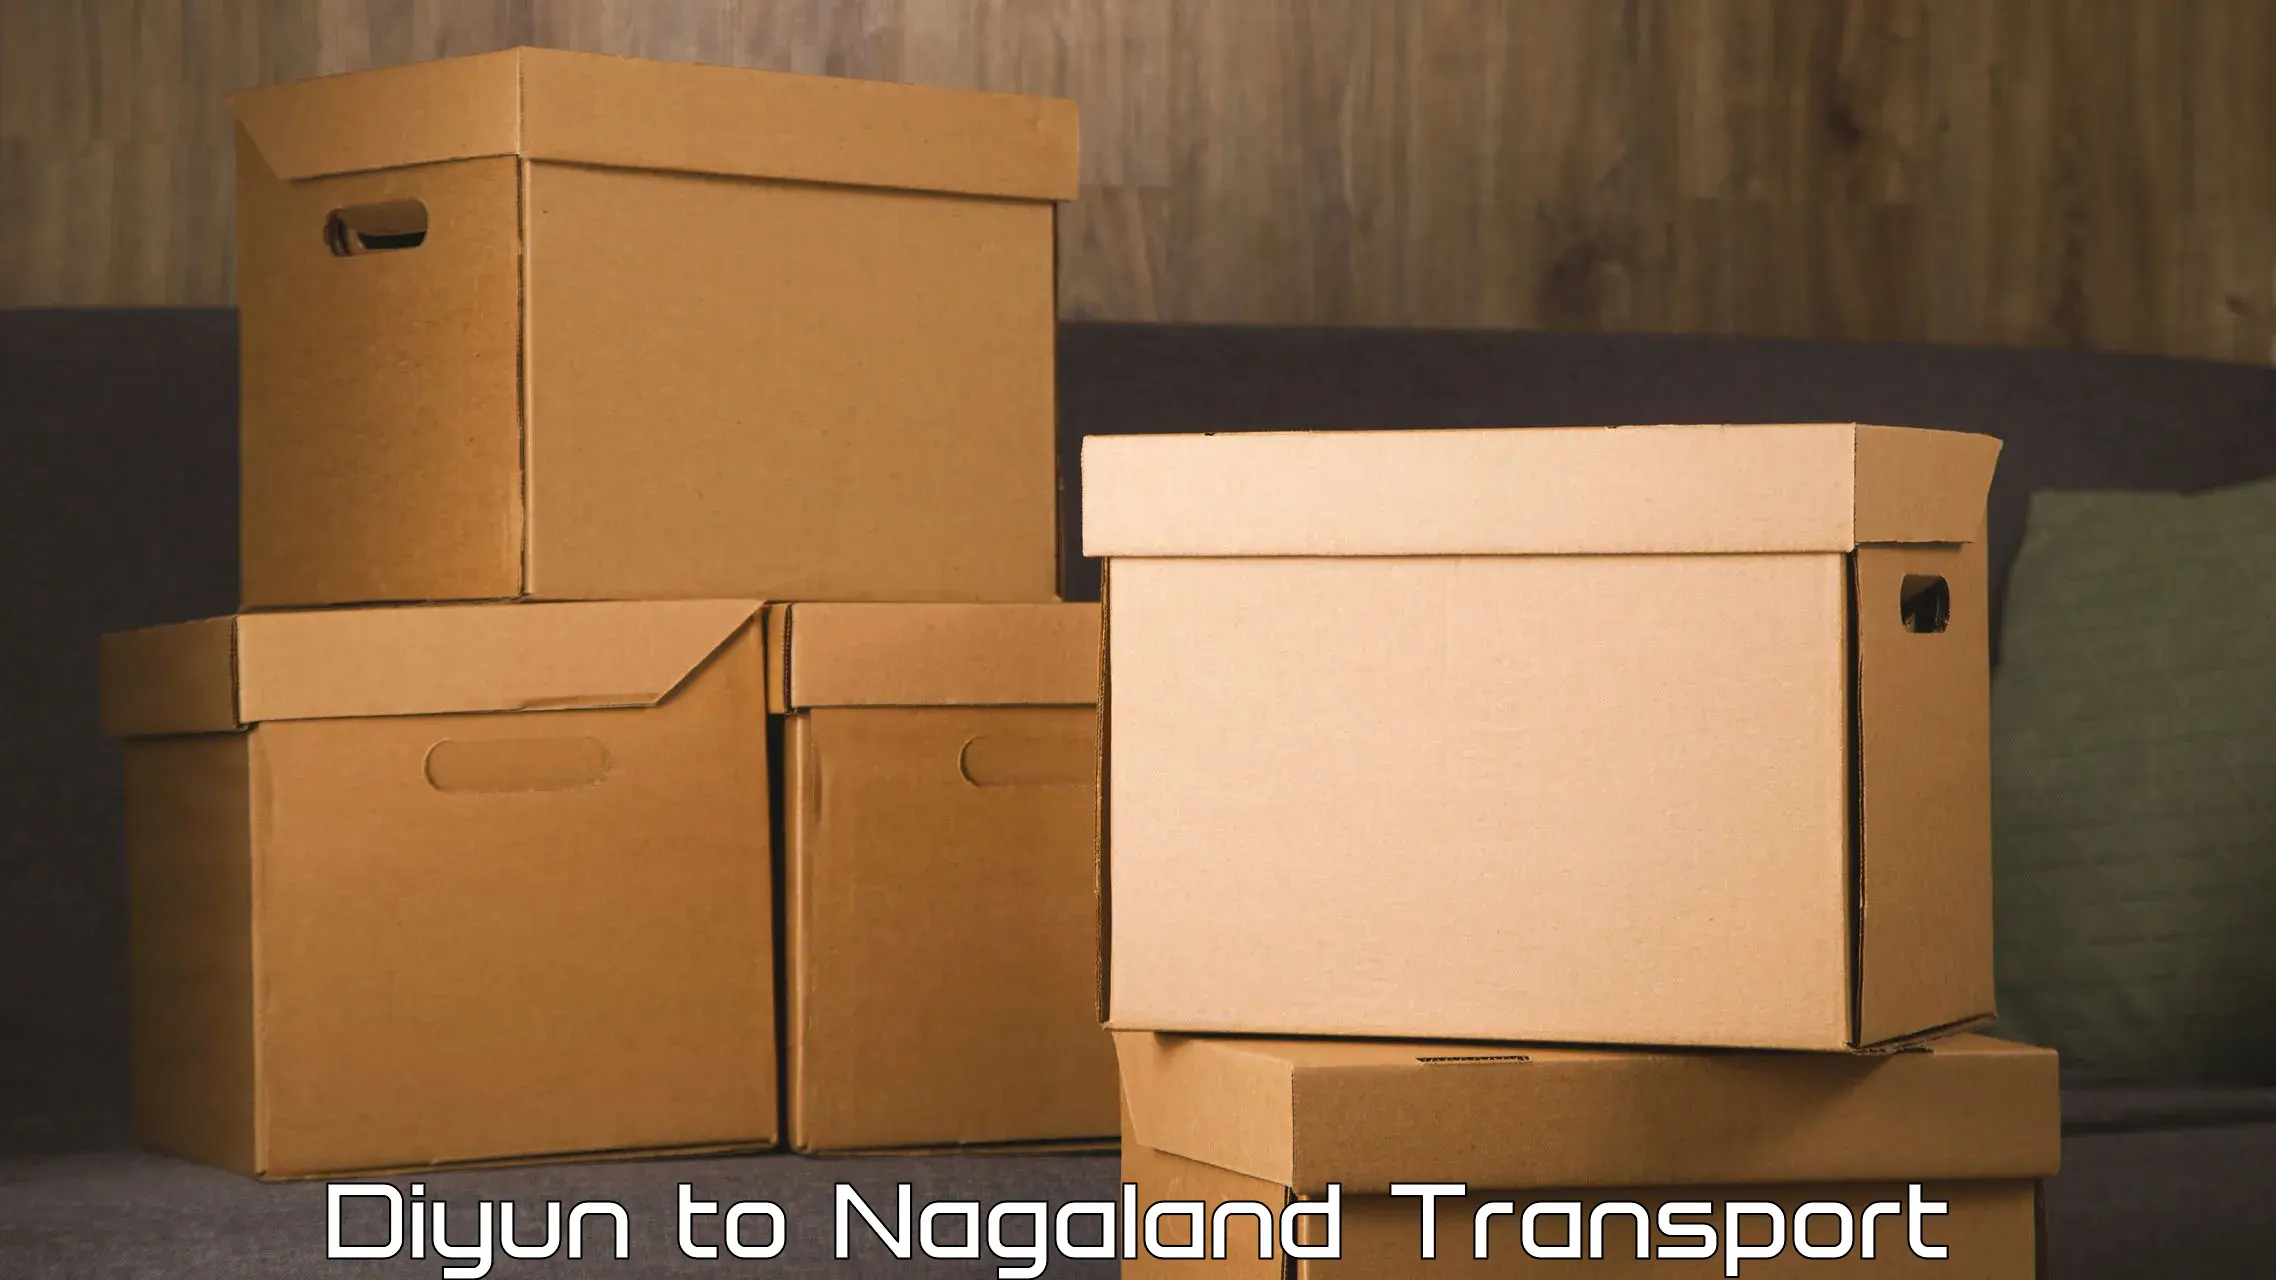 Transport in sharing in Diyun to Nagaland